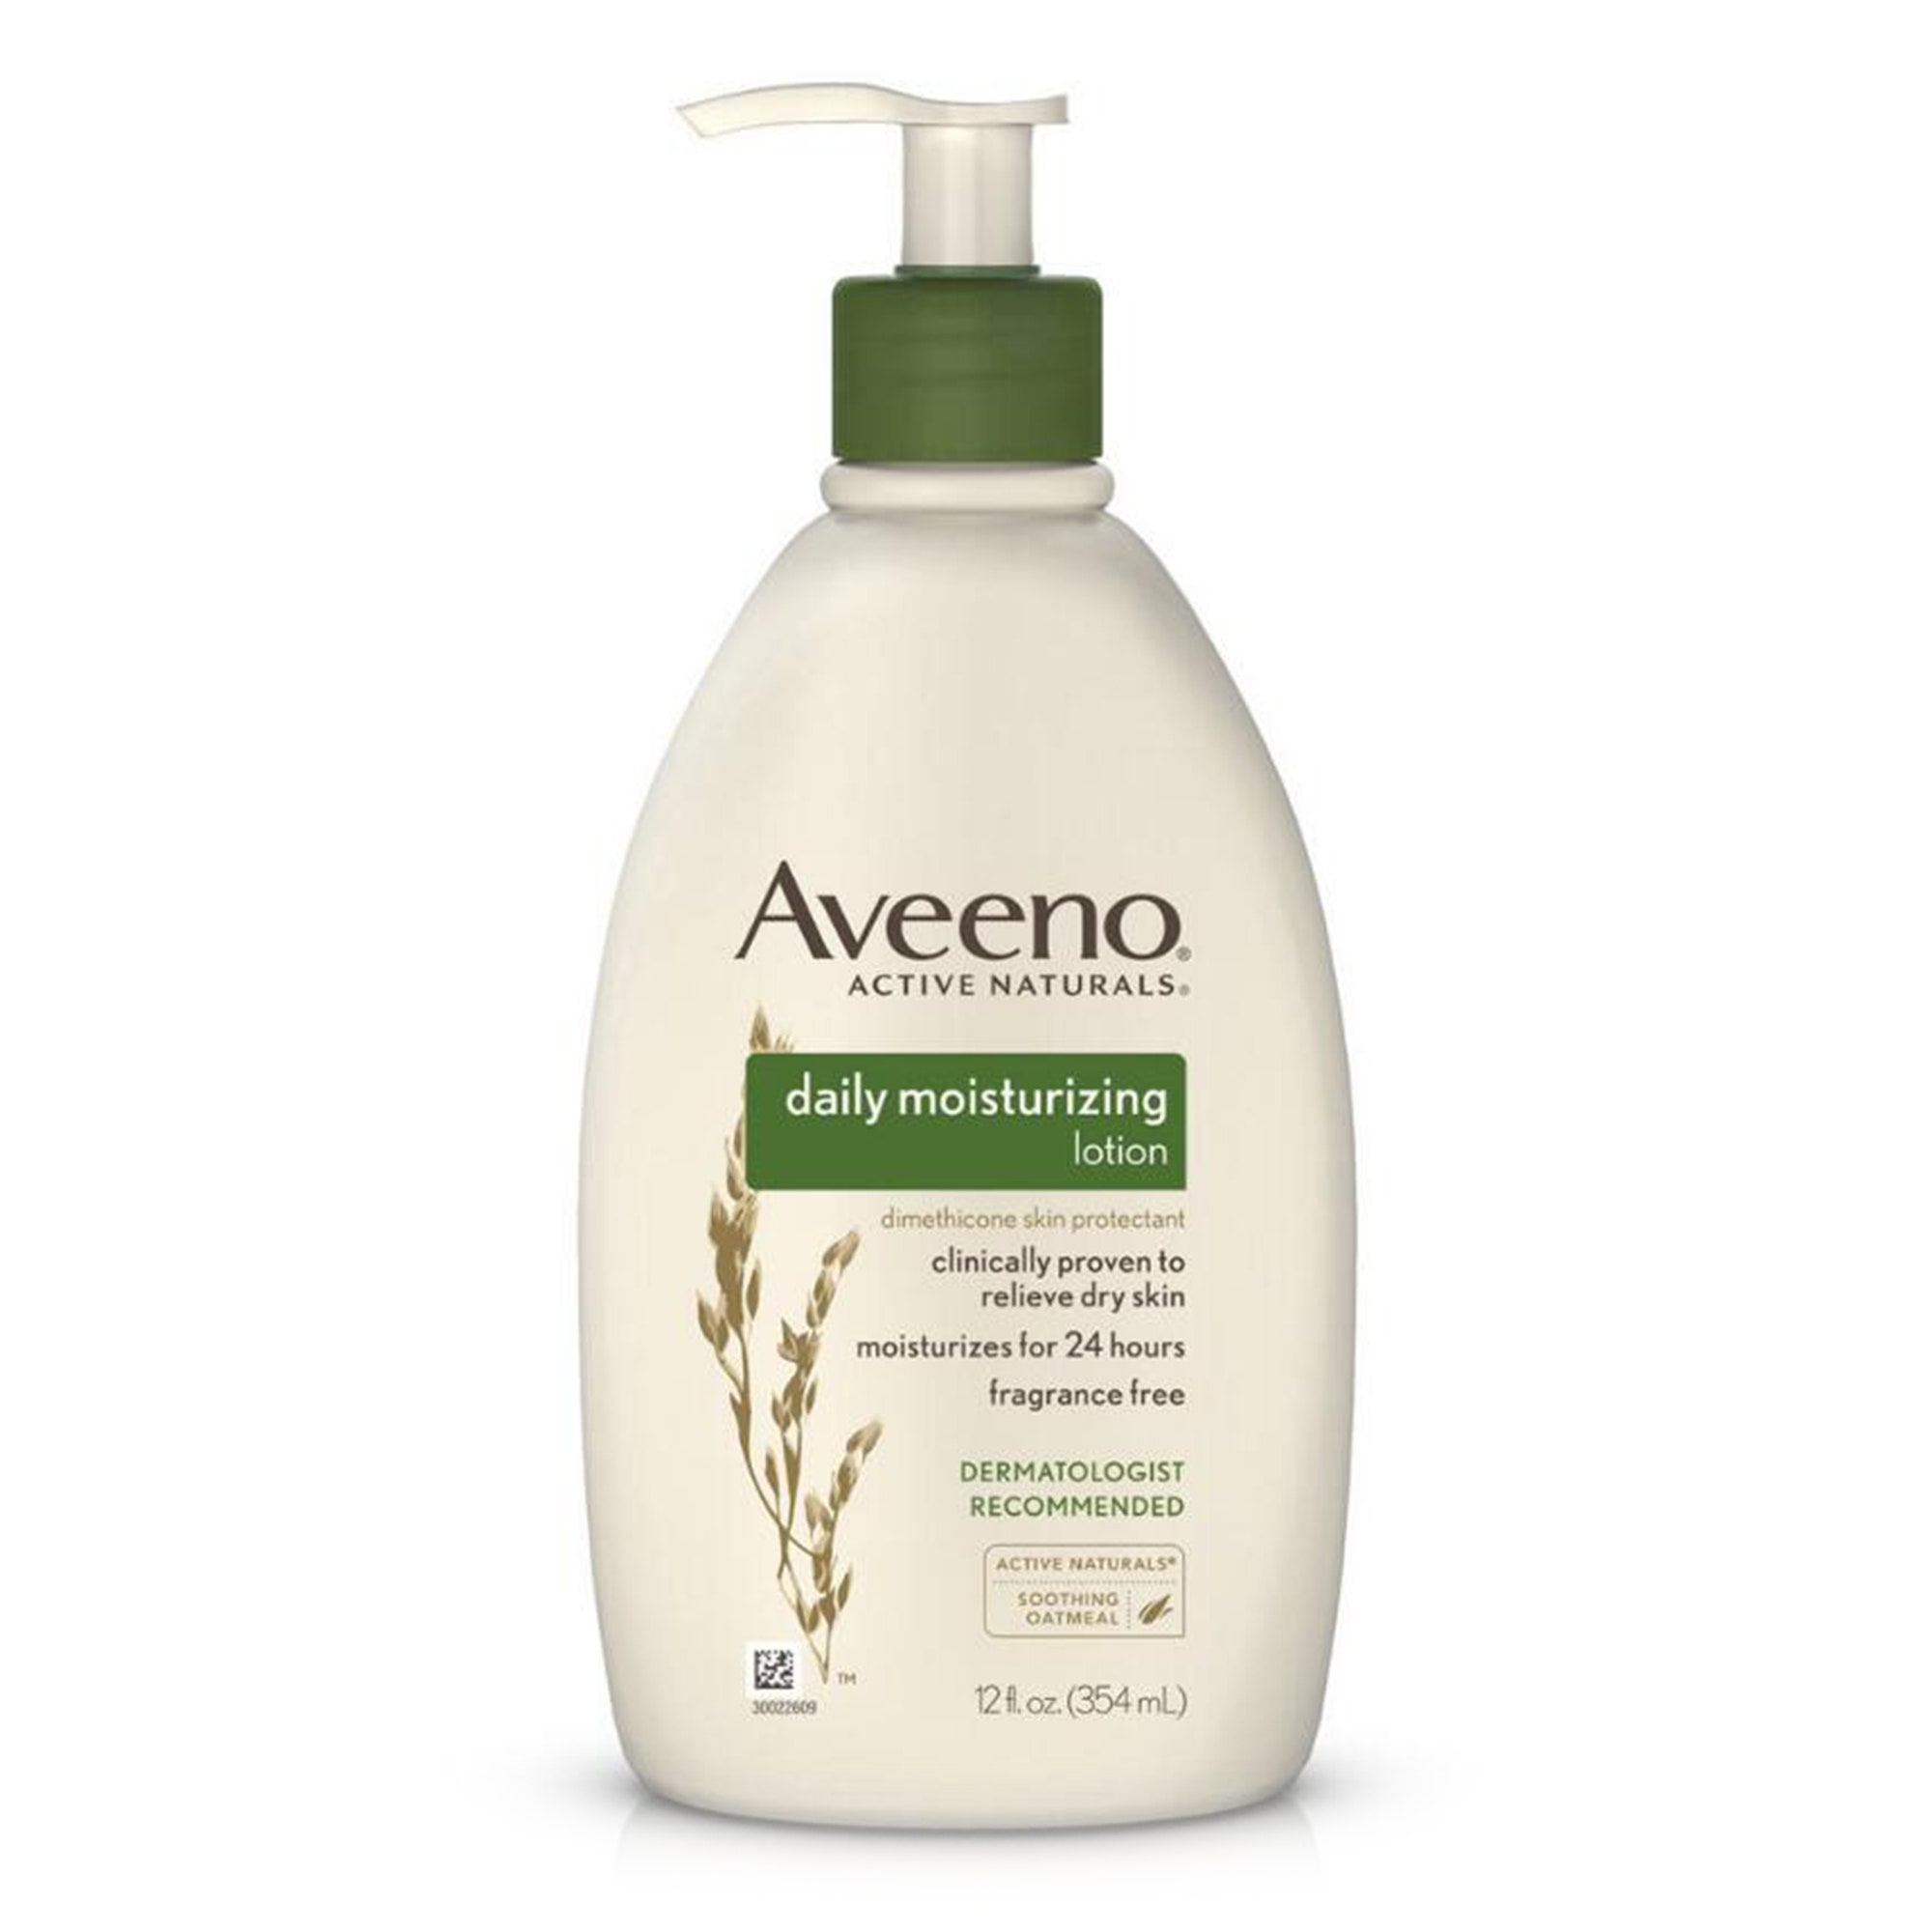 allure-rca-2017-aveeno-daily-moisturizing-lotion-review.jpg